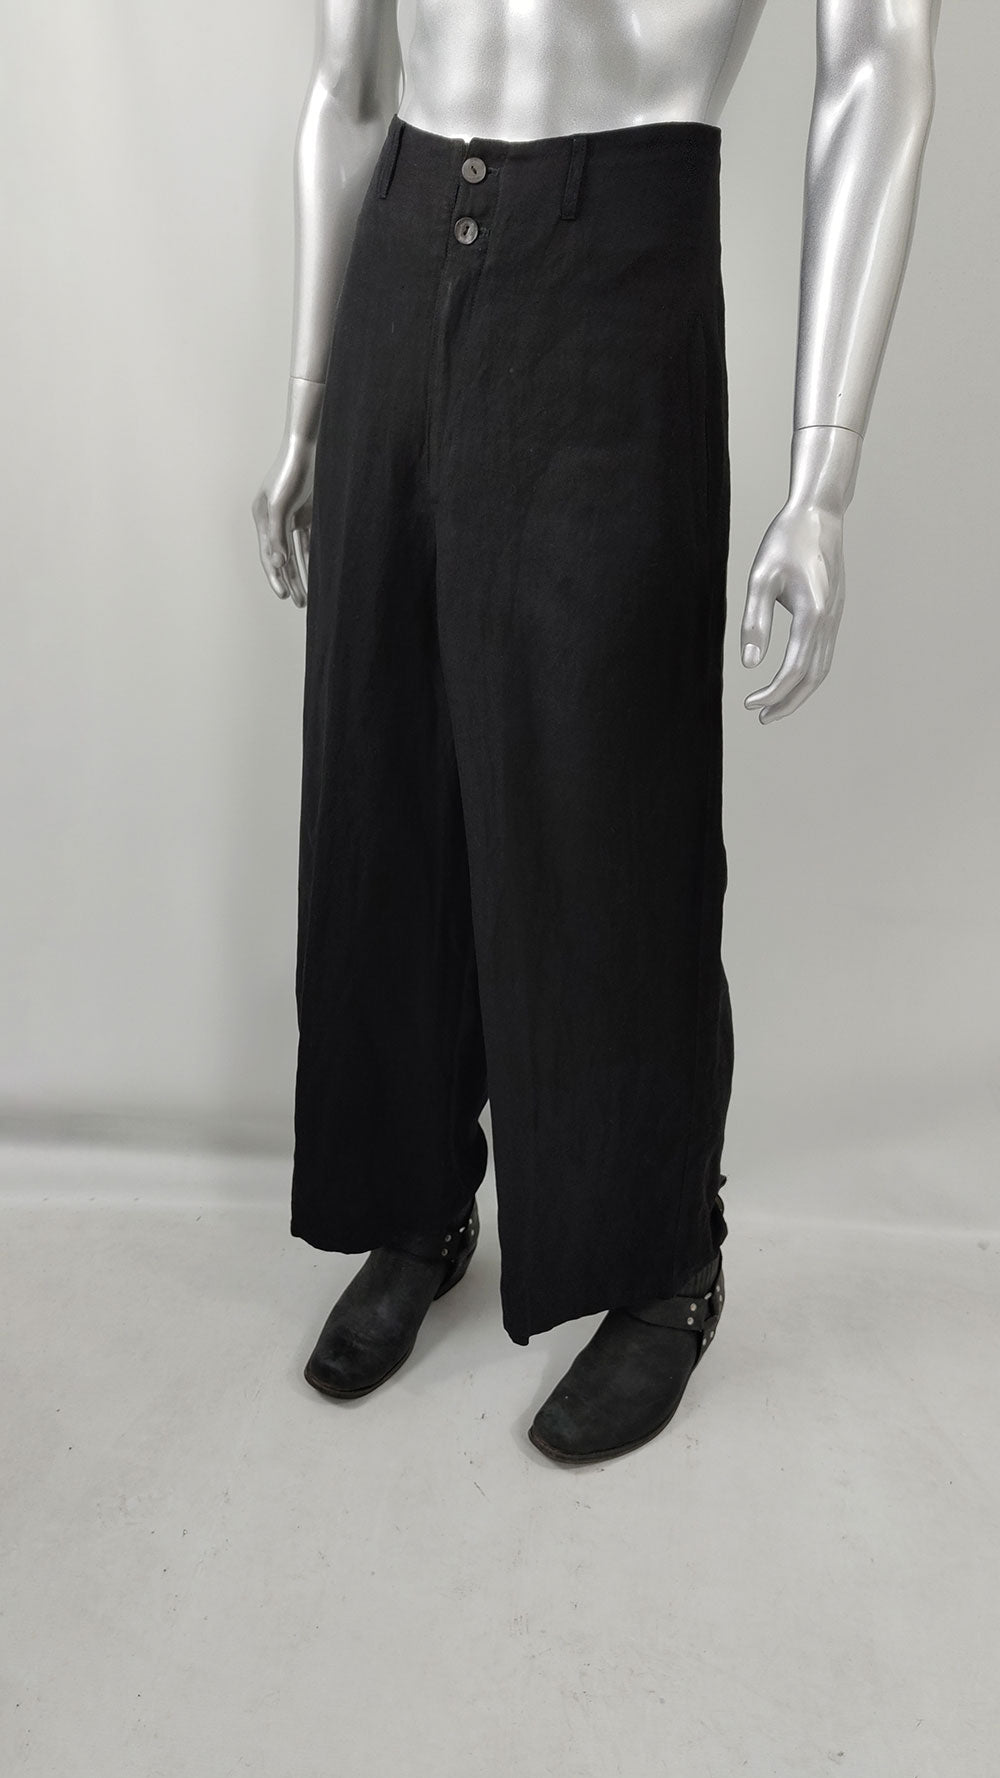 Calugi e Giannelli Vintage Mens Black Linen Blend Wide Leg Trousers